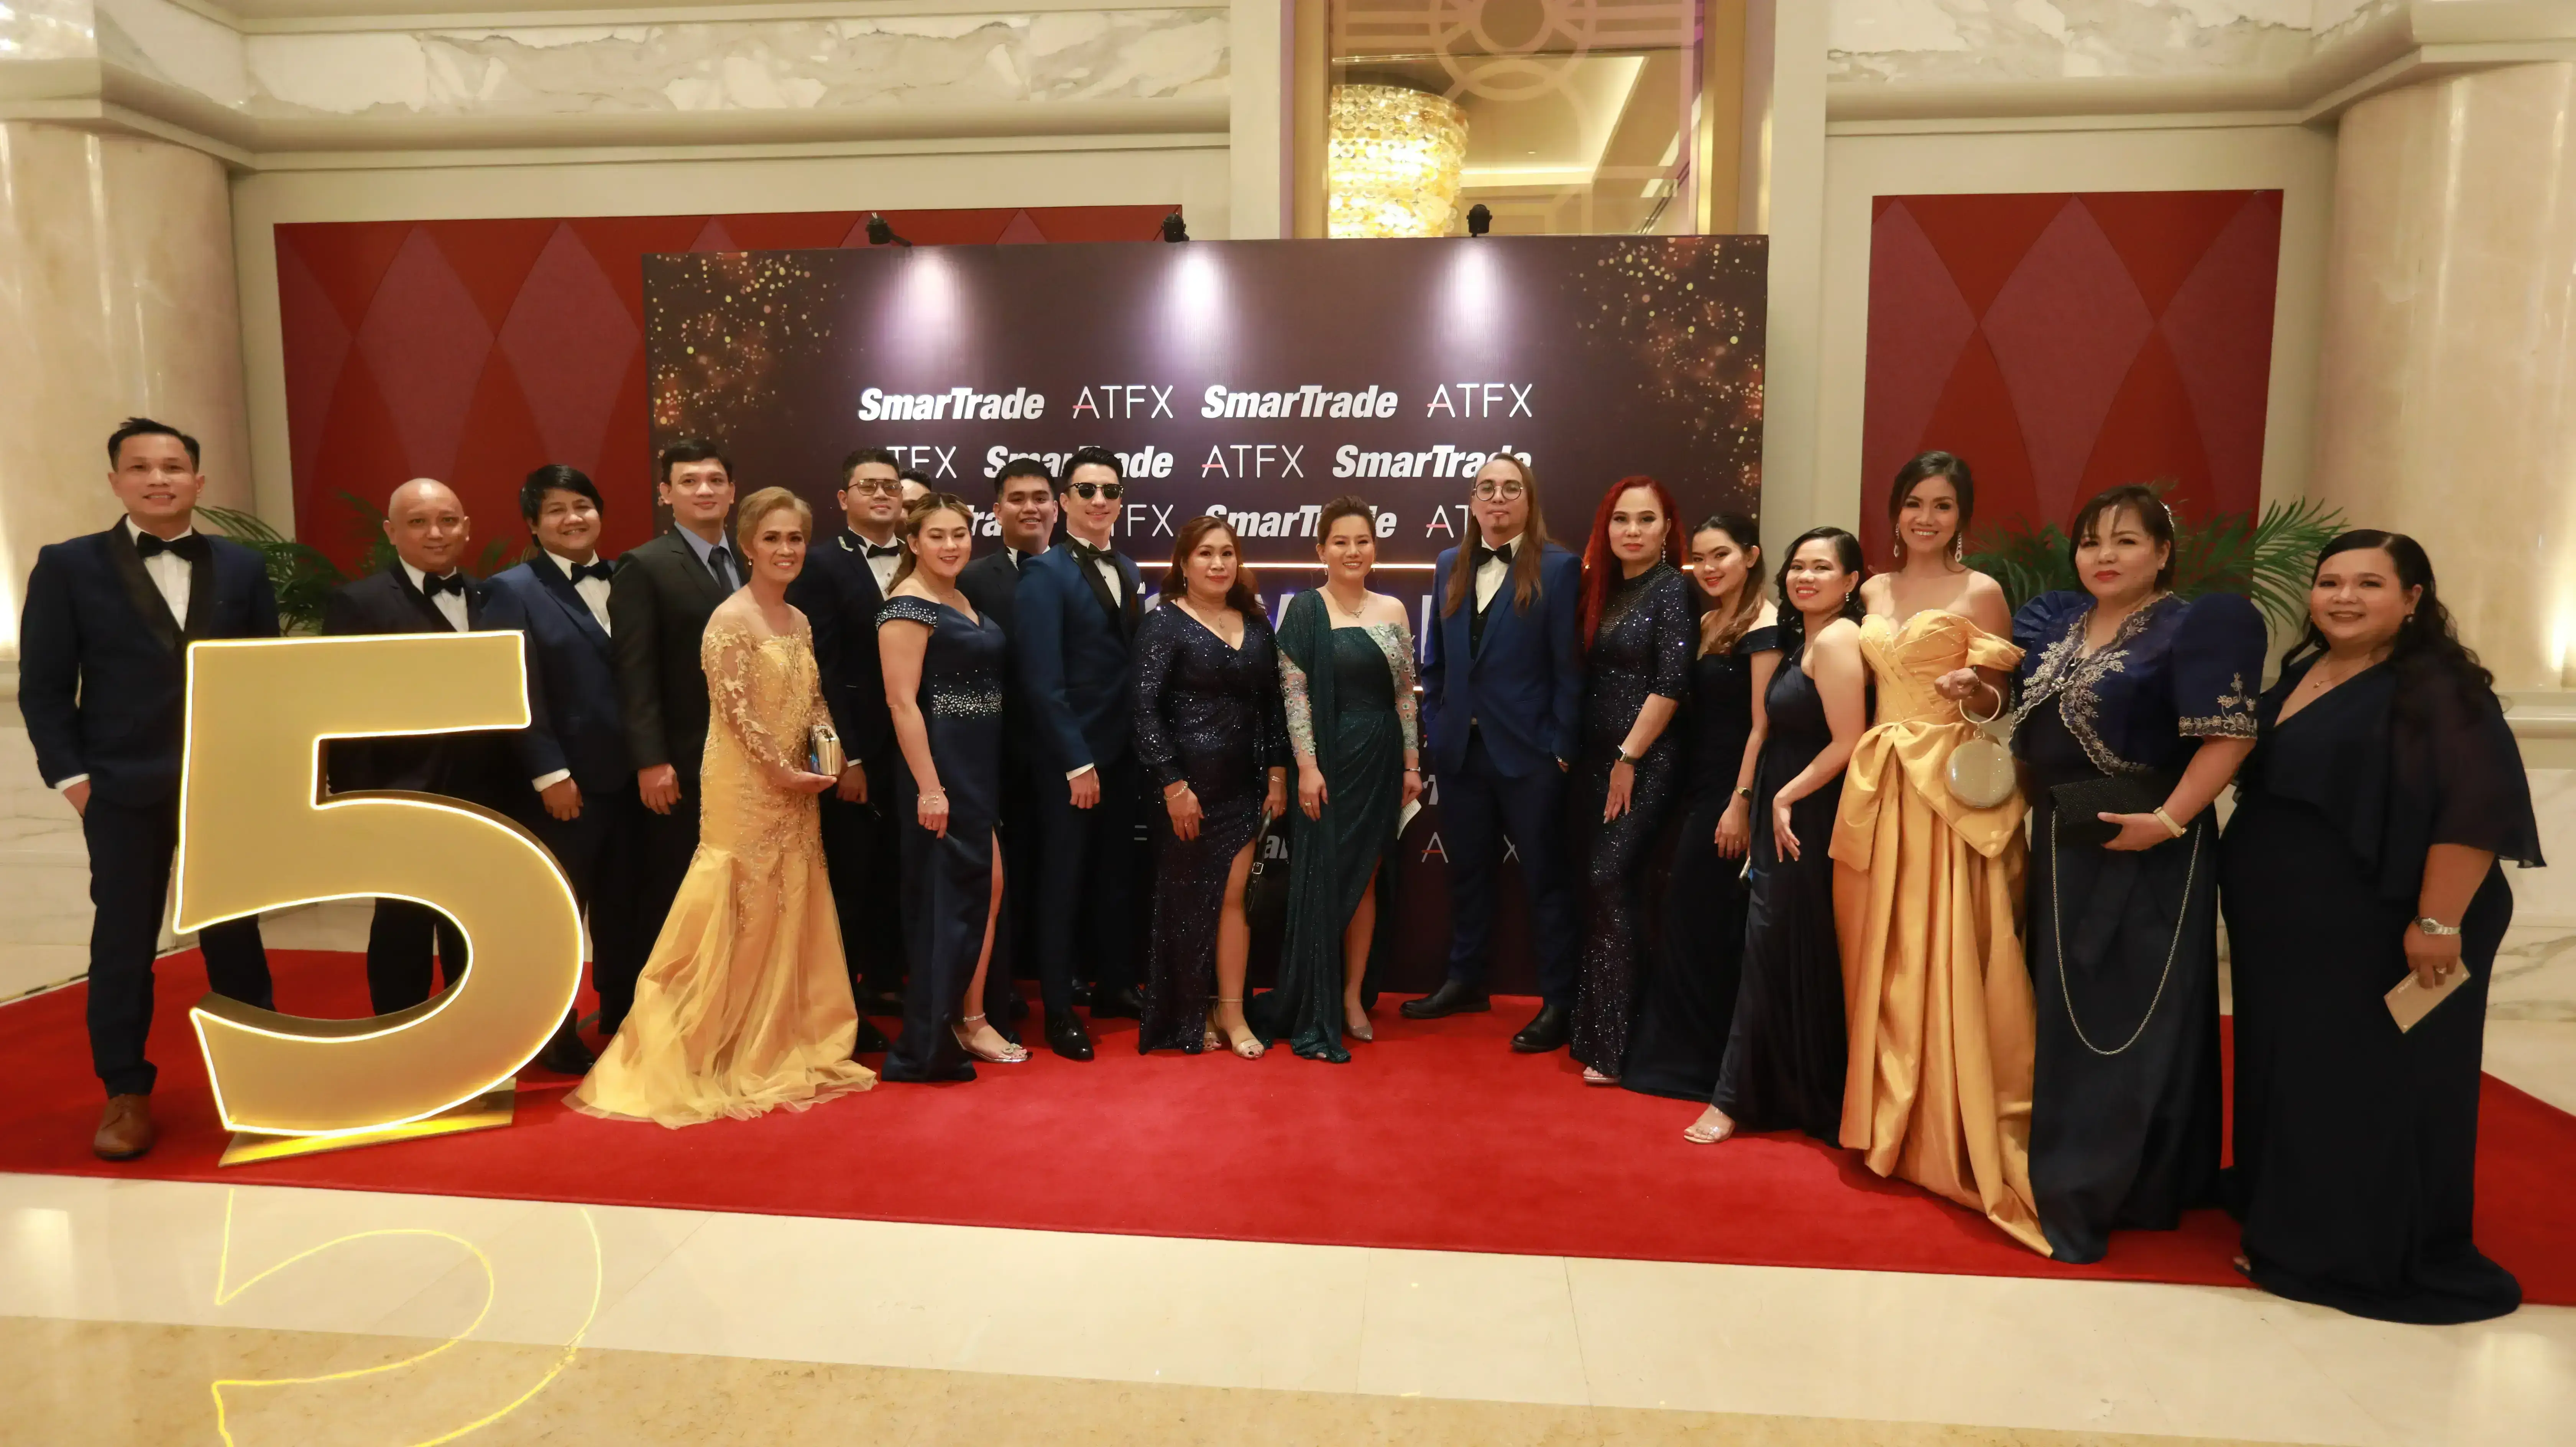 ATFX Philippines’ 5th Anniversary Celebration